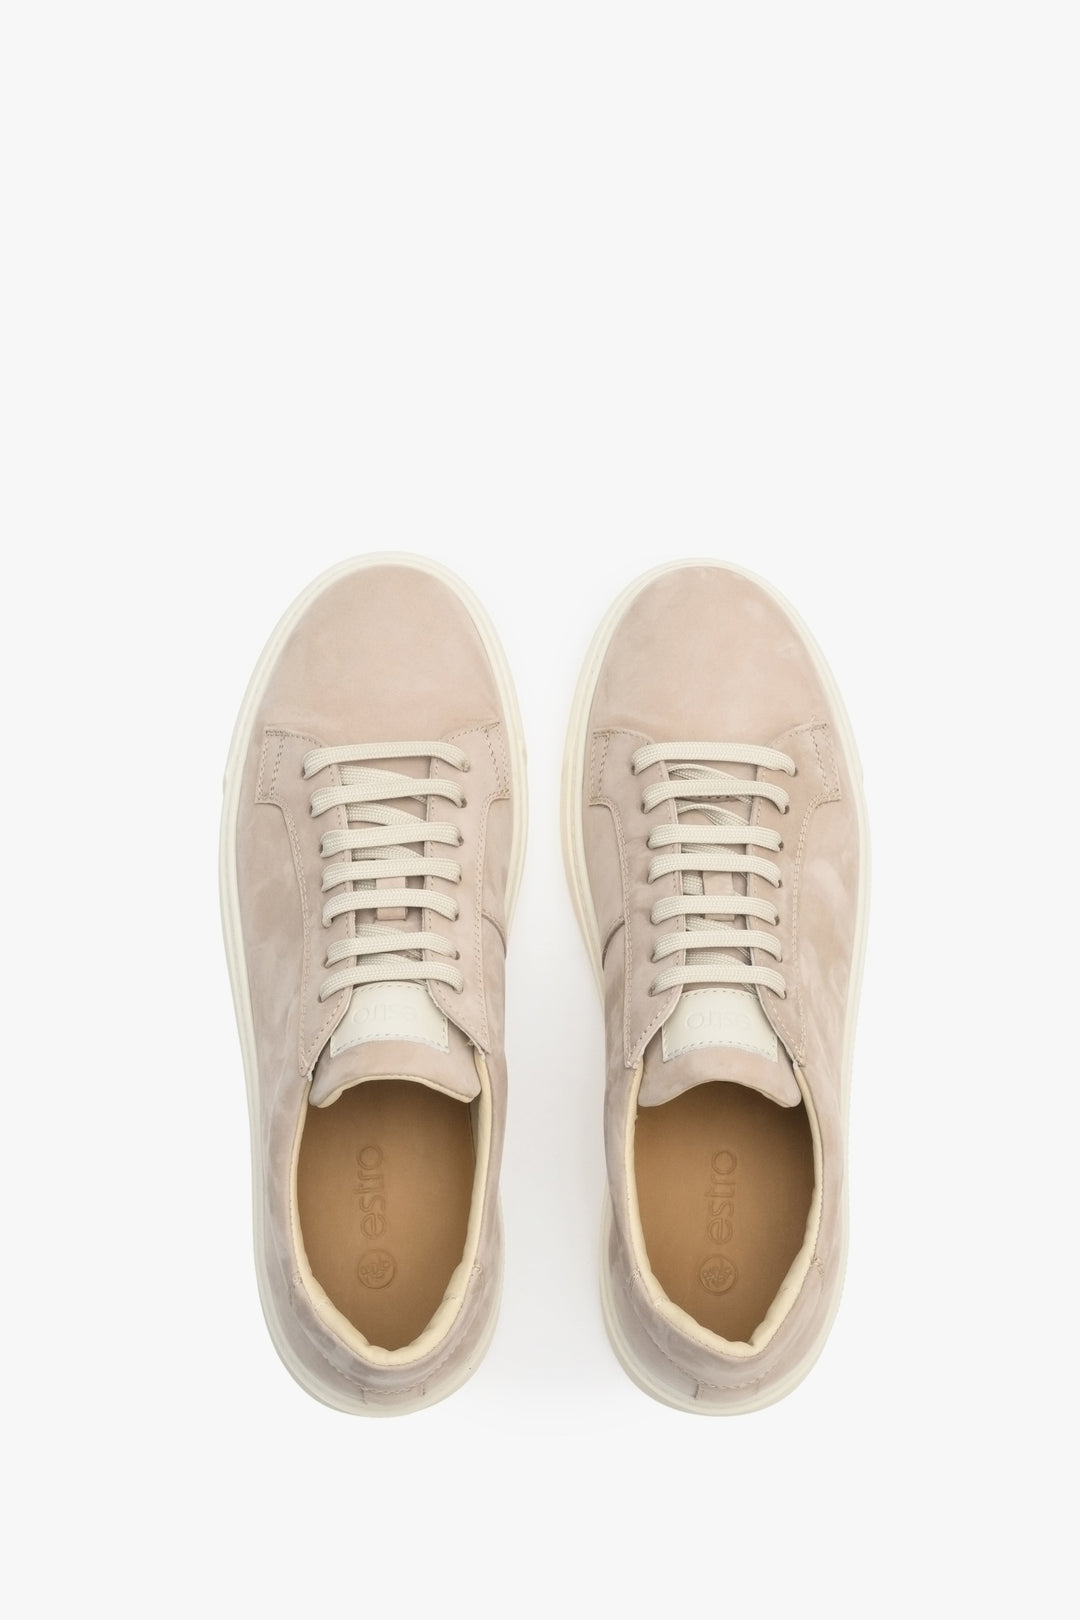 Men's Estro soft, natural nubuck sneakers in beige - shoe presentation from above.